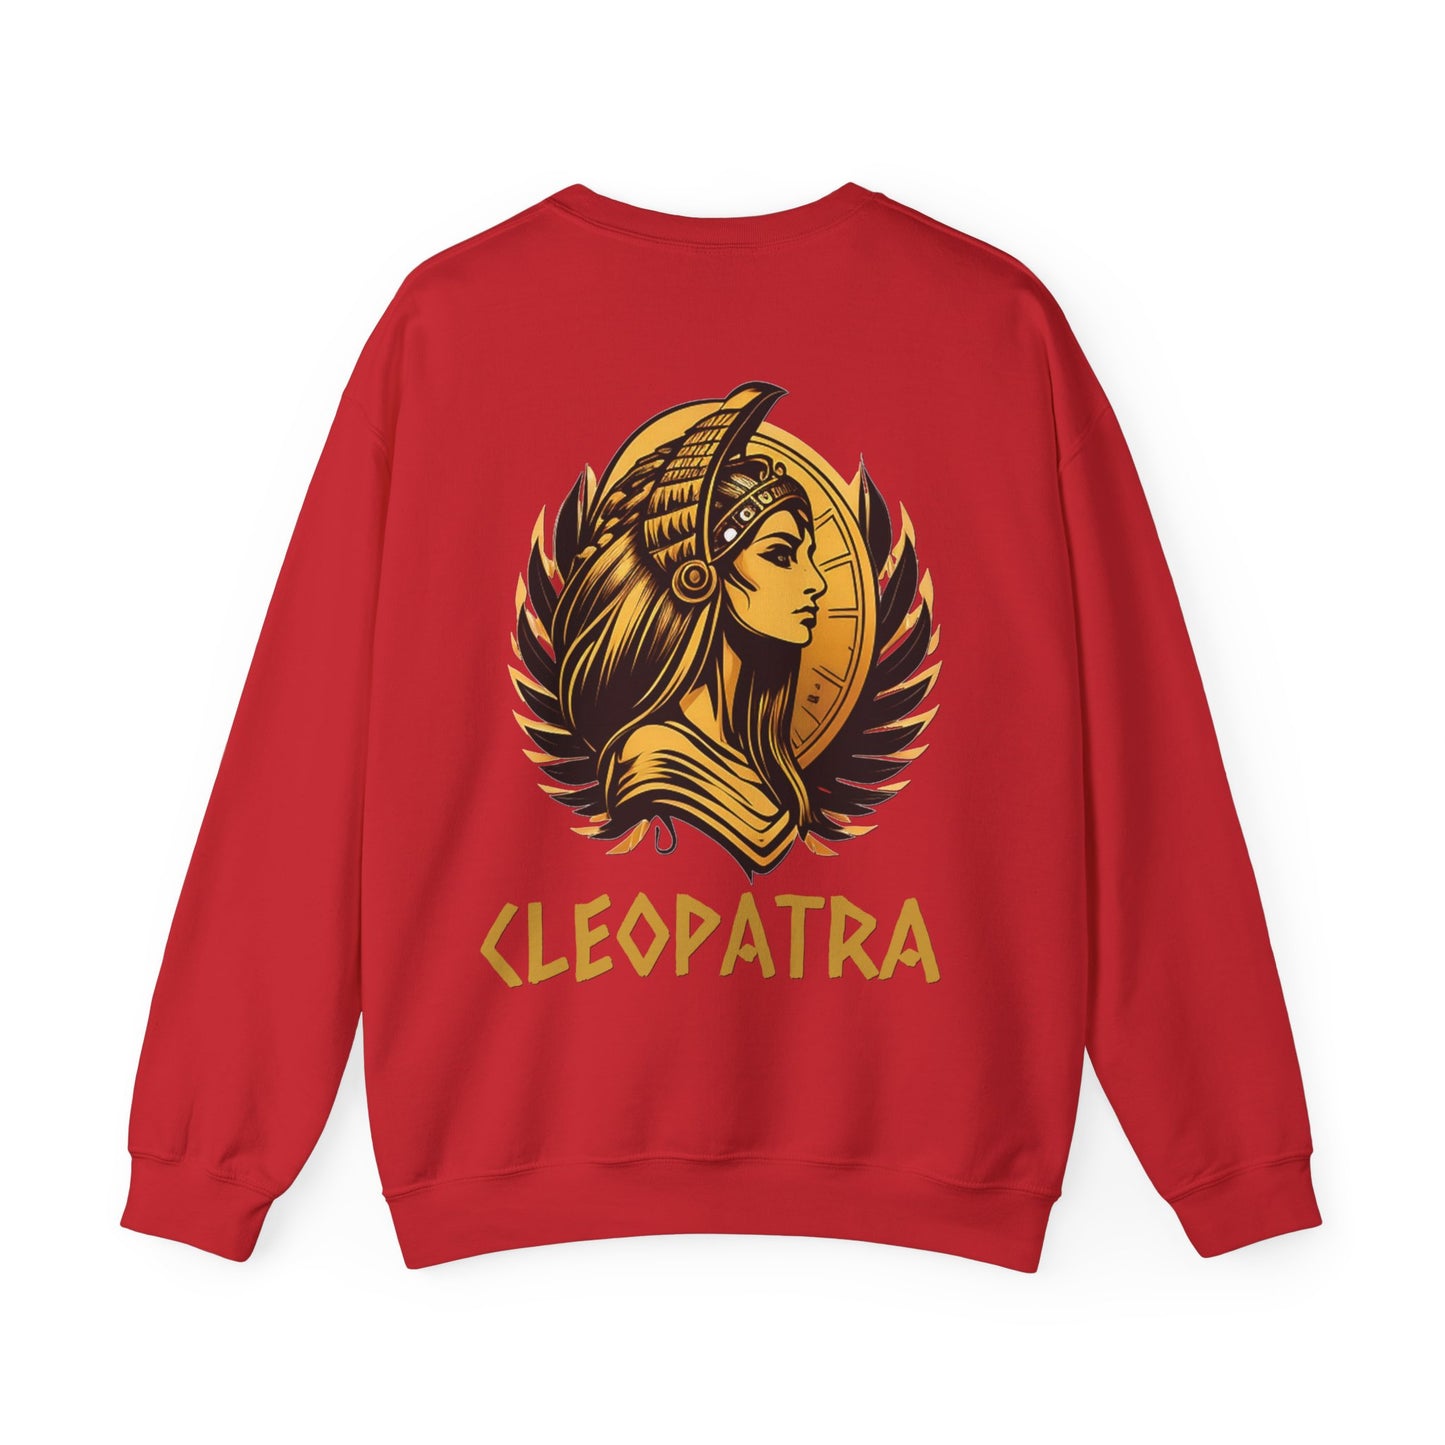 Cleopatra, Princess, Gold, Egyptian, Women and Men Unisex, Crew Neck Sweatshirt